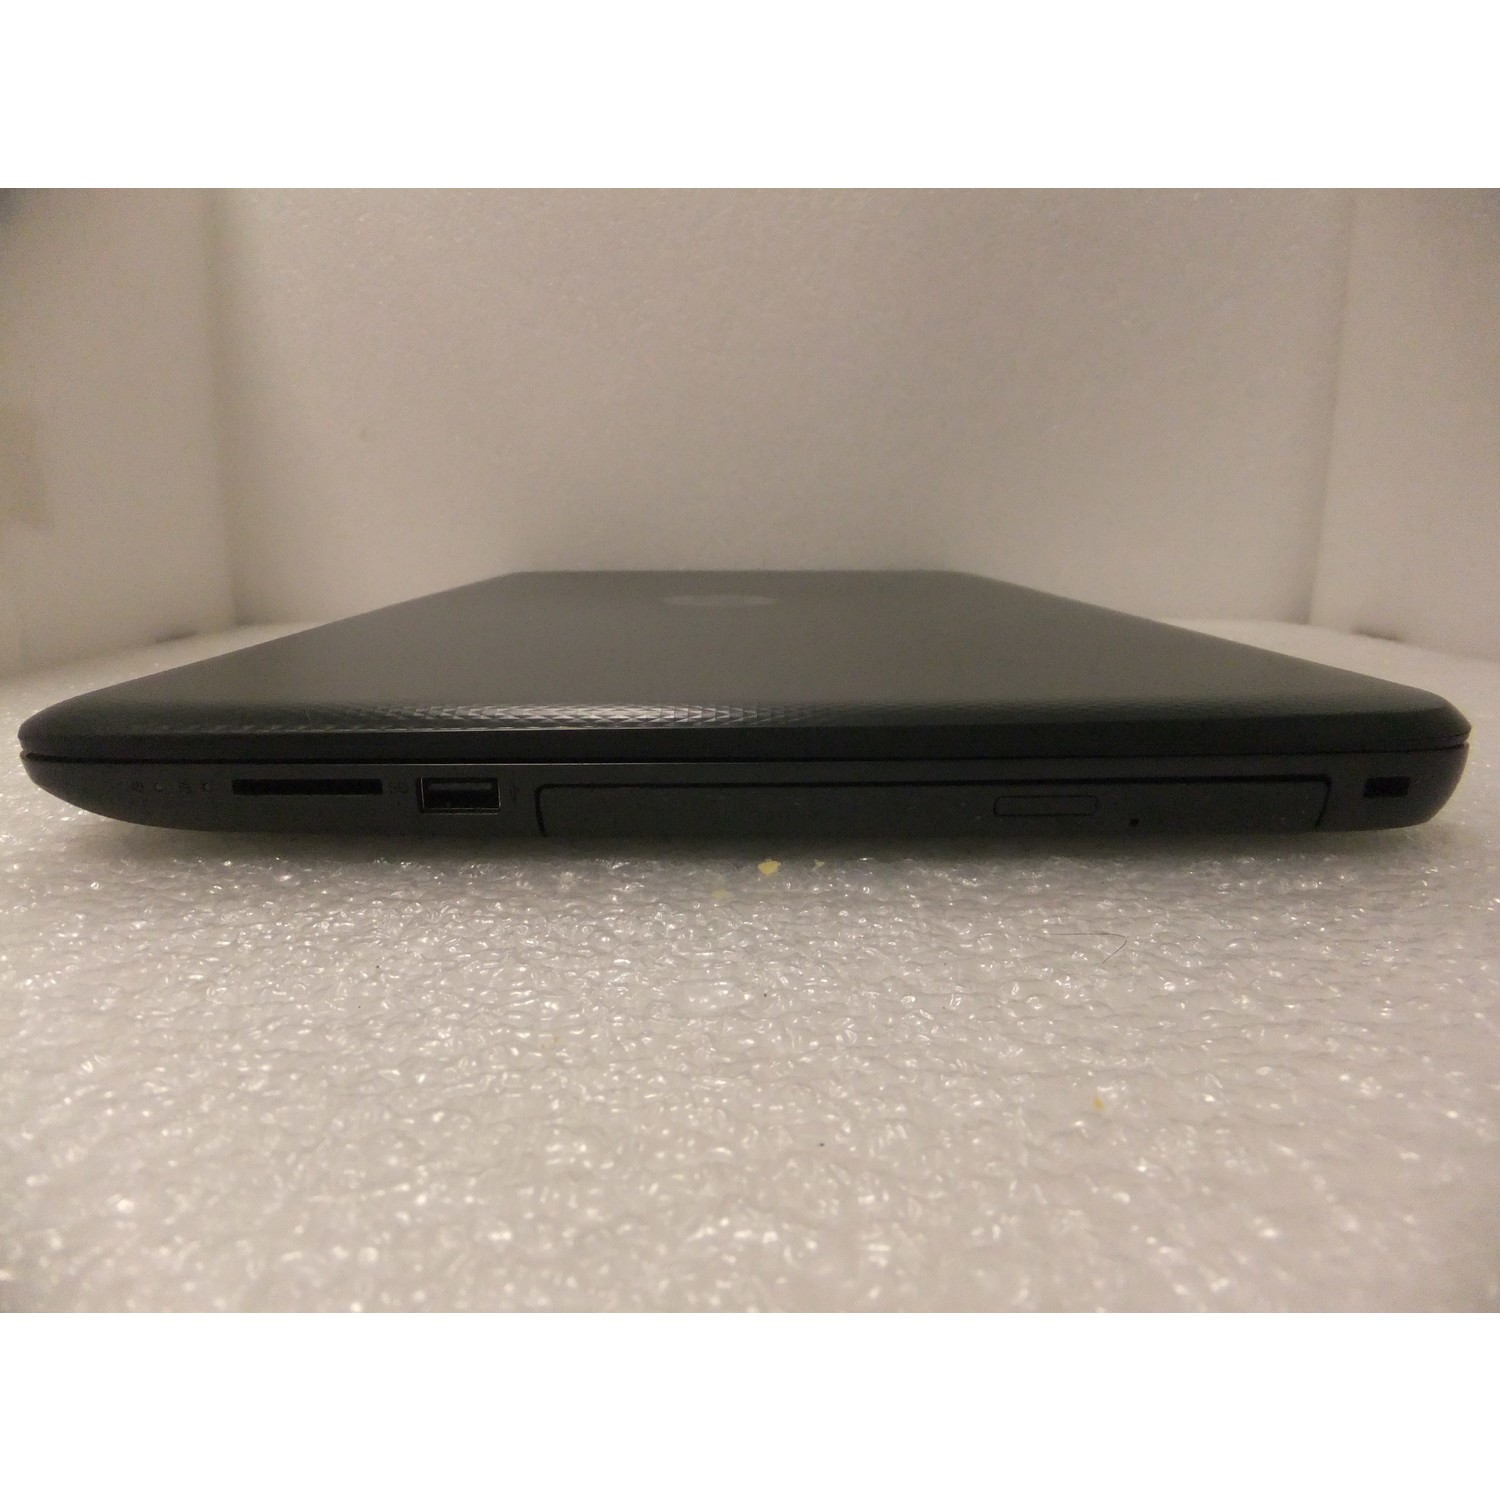 Pre-Owned Grade T1 HP 250 G4 Dark Grey/Black Intel Core i3-5005U 2GHz 4GB  500GB 15.6 Windows 7 Professional DVD-RW Laptop 30days